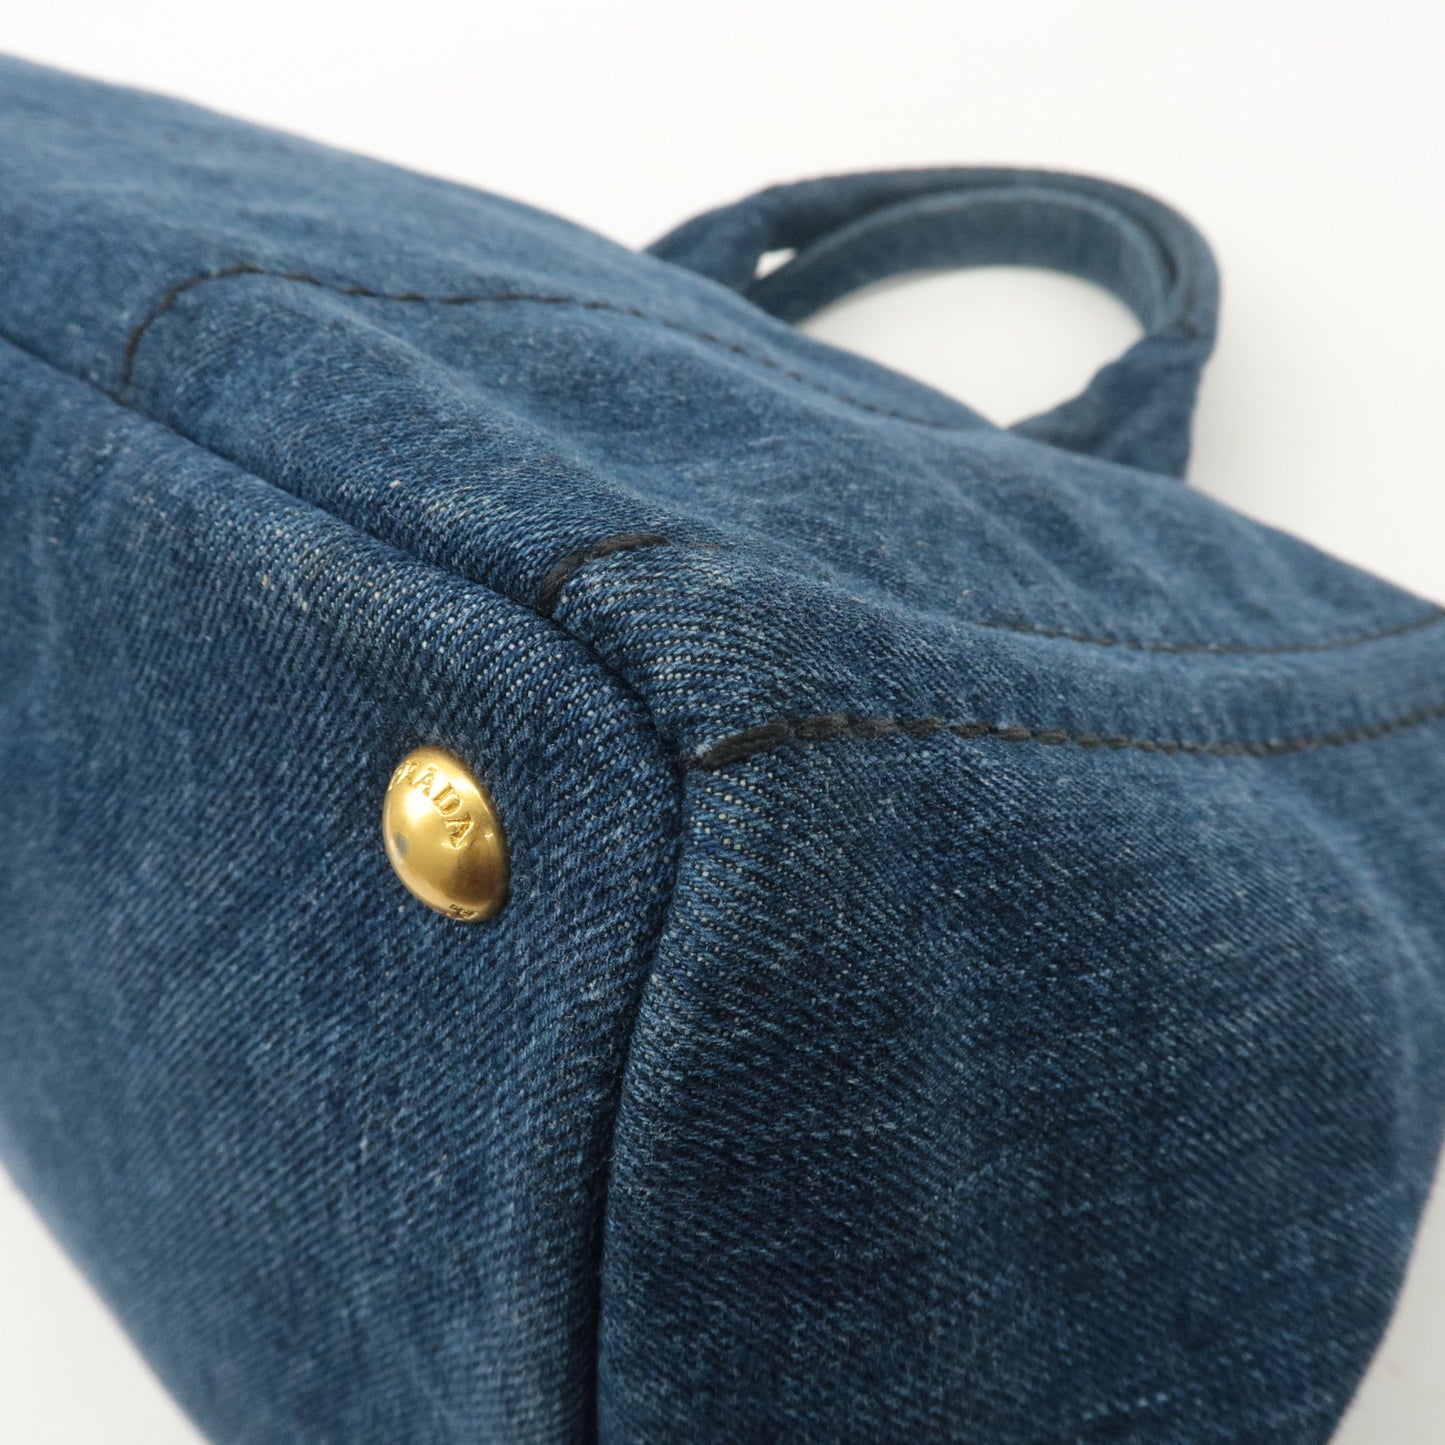 PRADA Canapa Denim 2Way Bag Hand Bag Shoulder Bag Blue B2642B